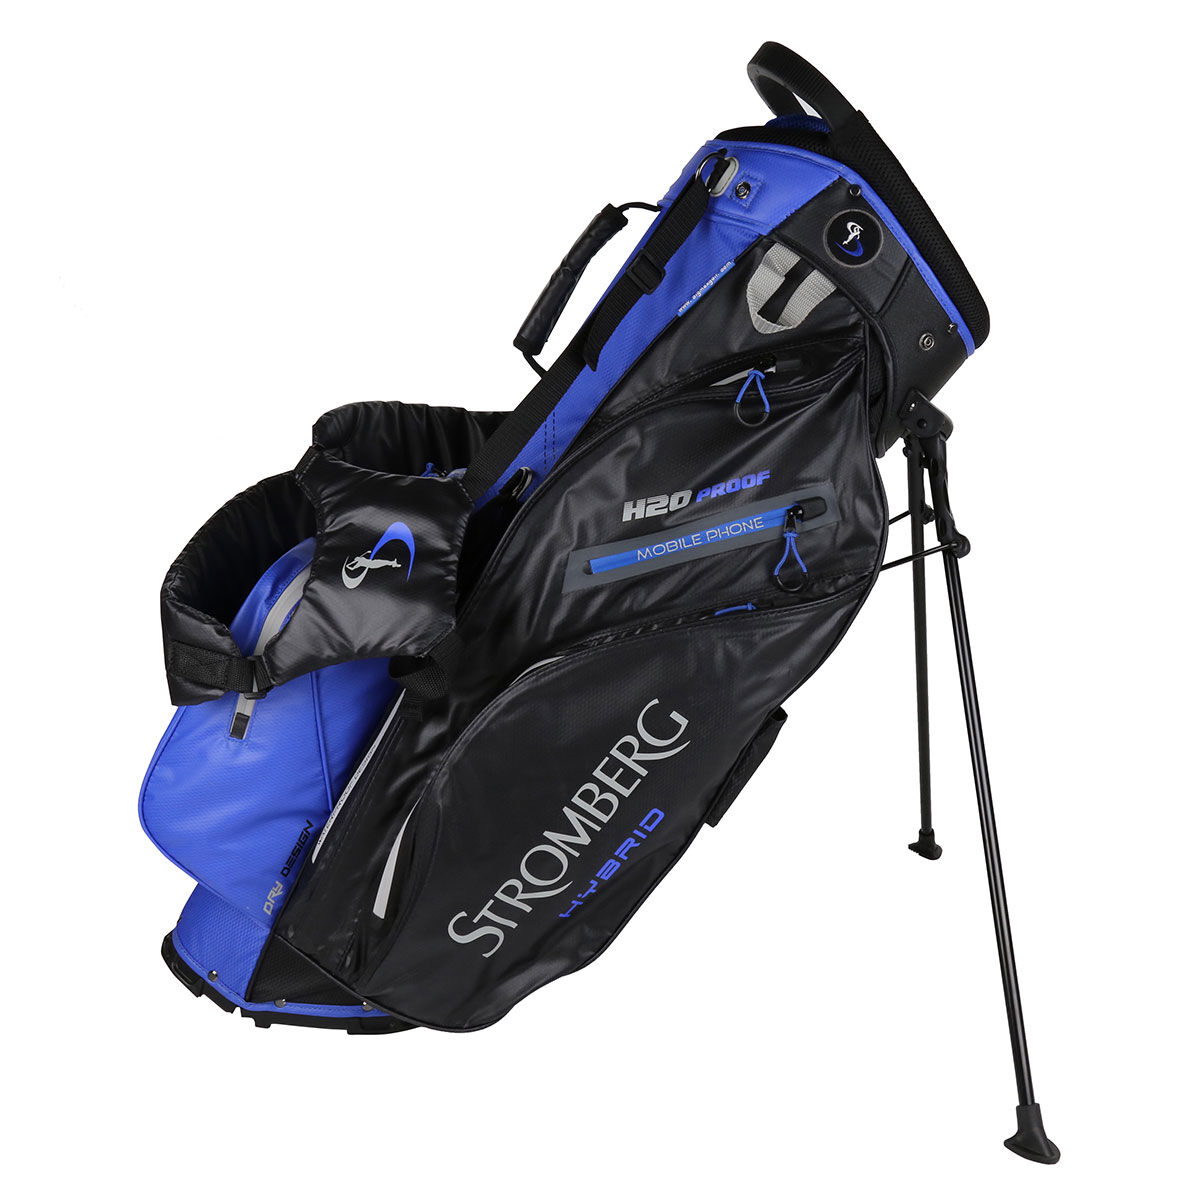 Stromberg Hybrid Waterproof Golf Stand Bag, Black/royal/silver, One Size | American Golf